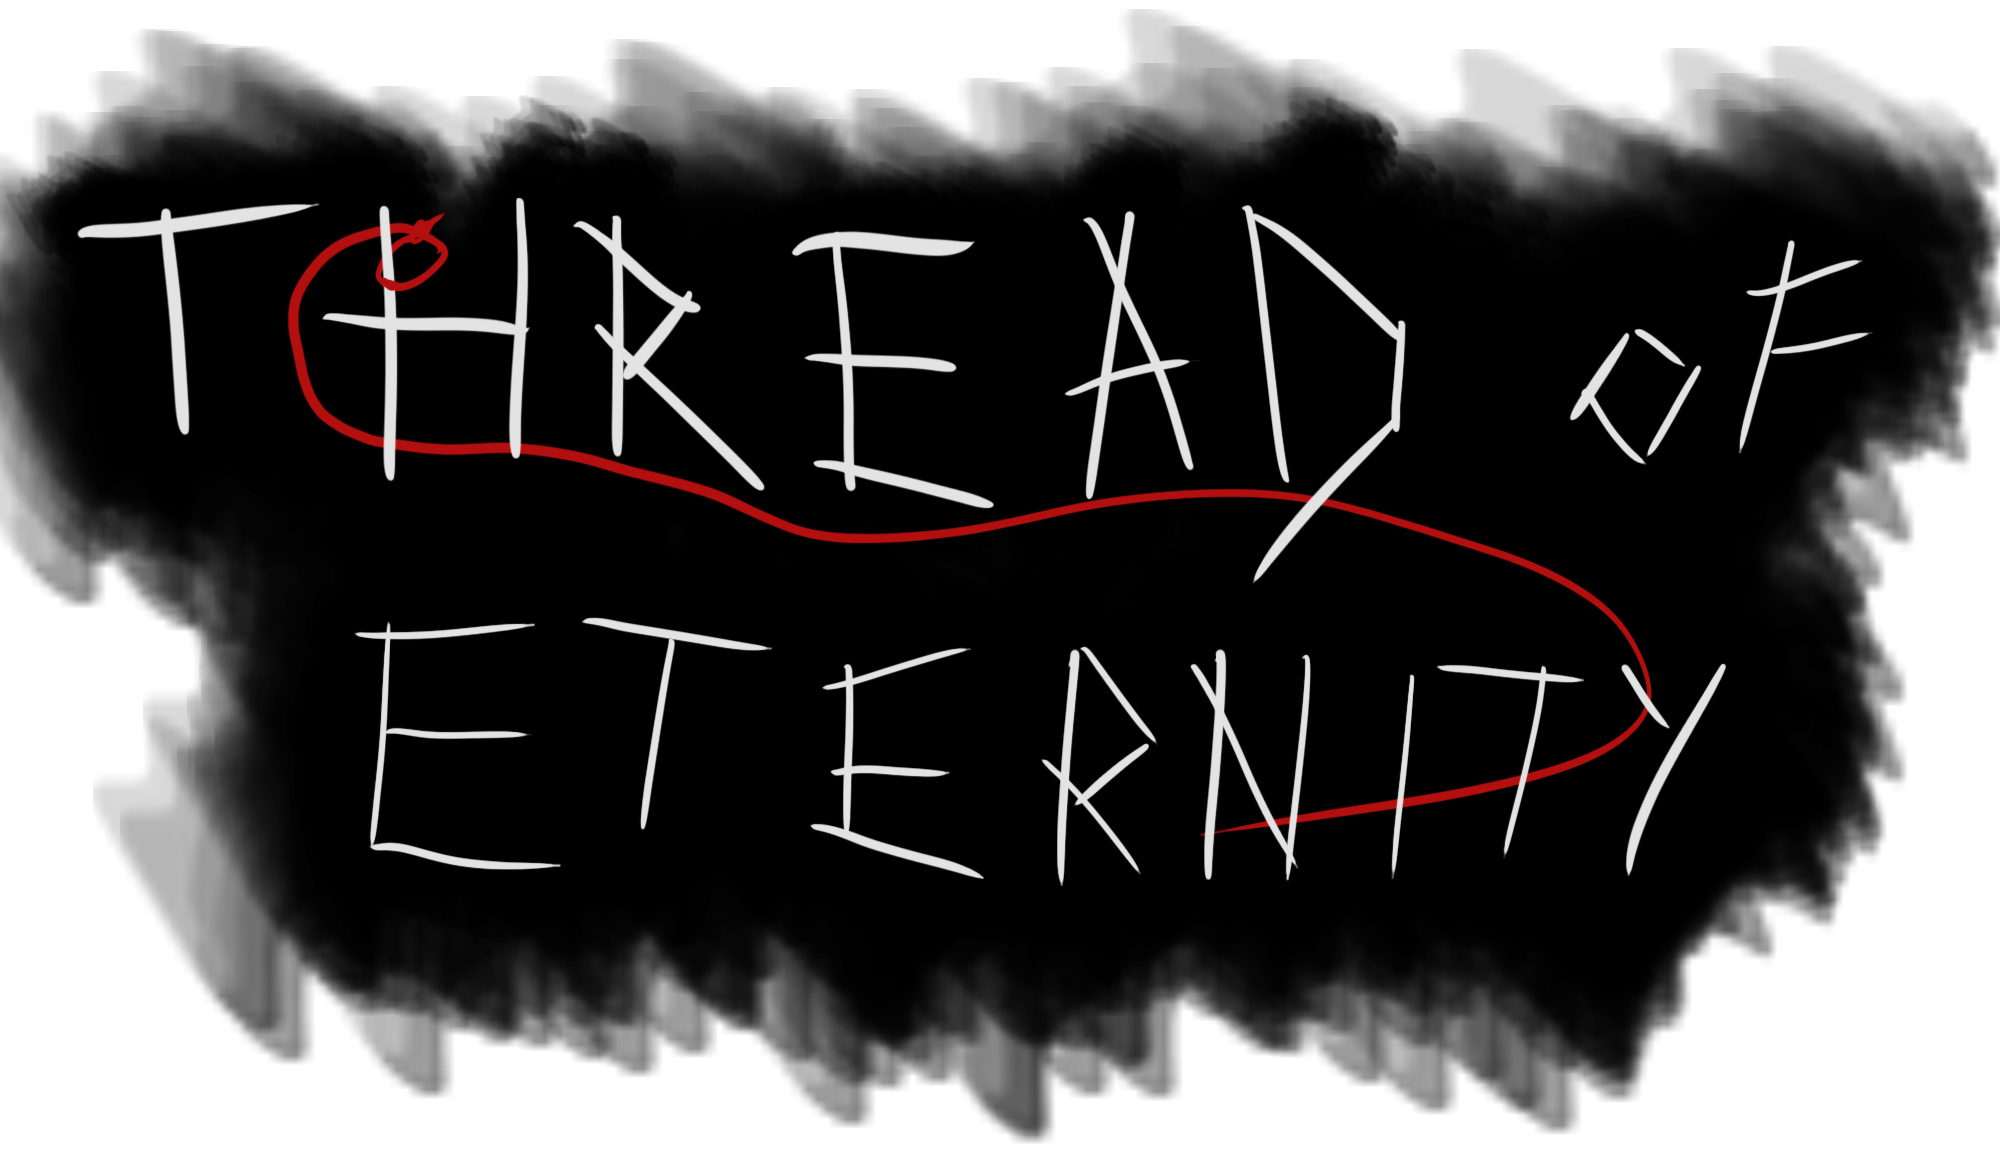 Thread of Eternity